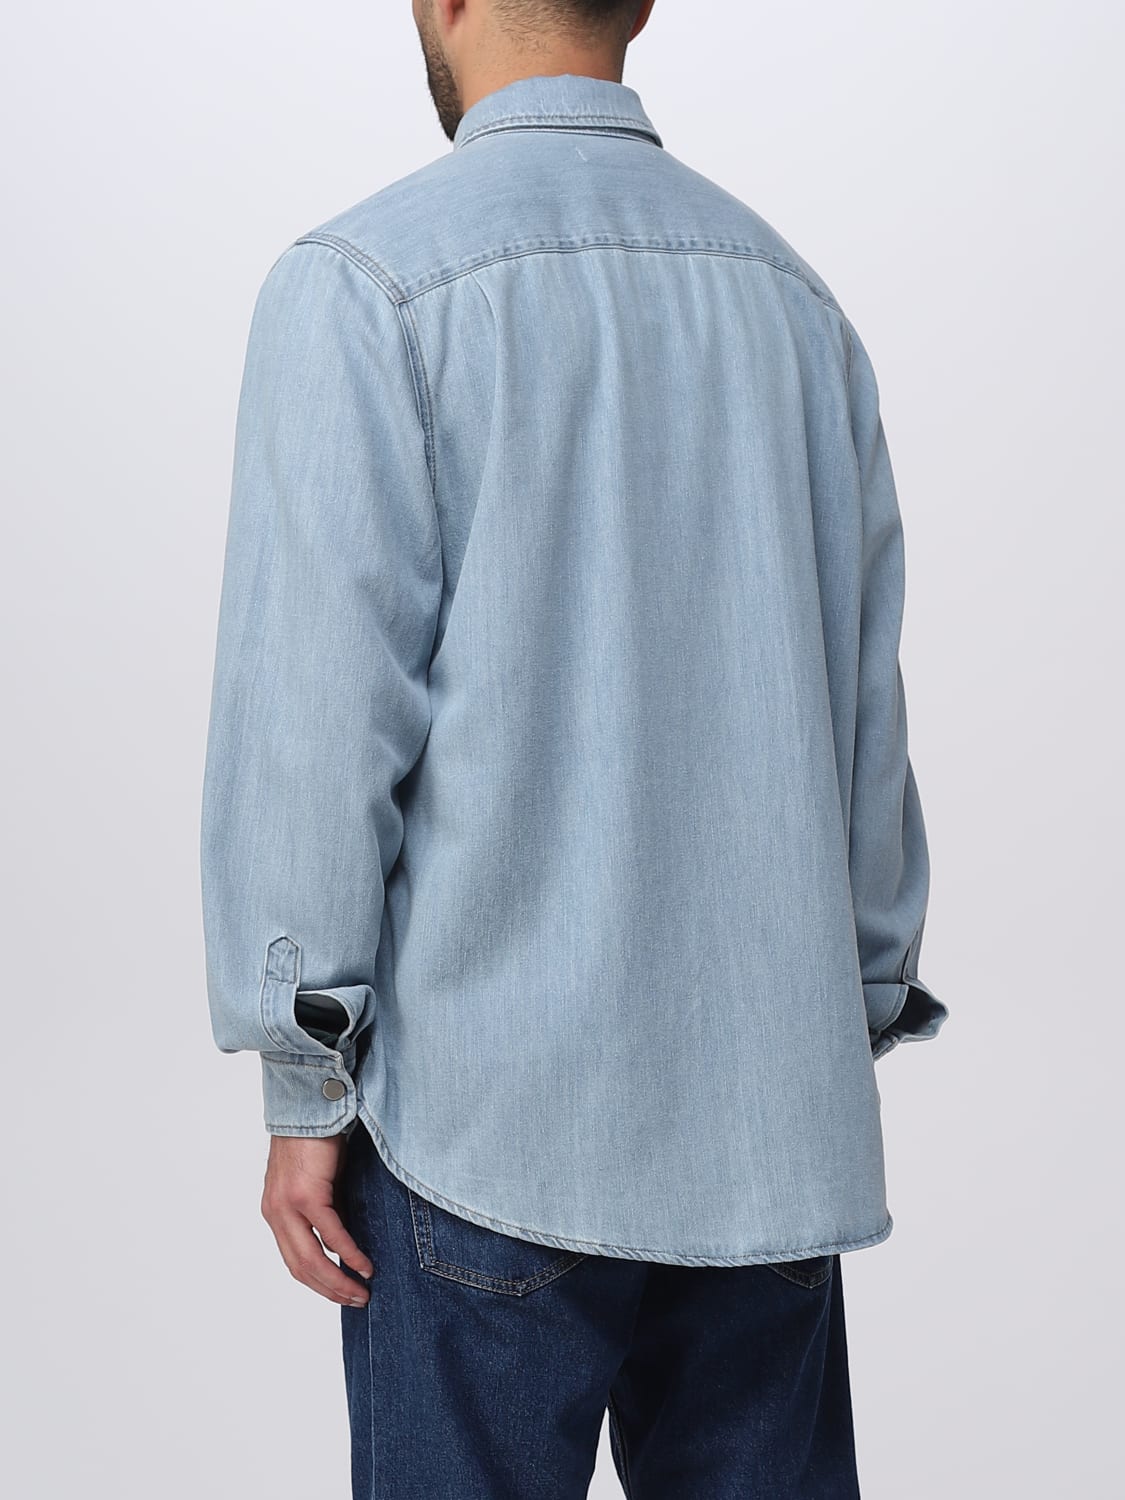 GRIFONI: jacket for men - Stone Washed | Grifoni jacket GJ12004199B ...